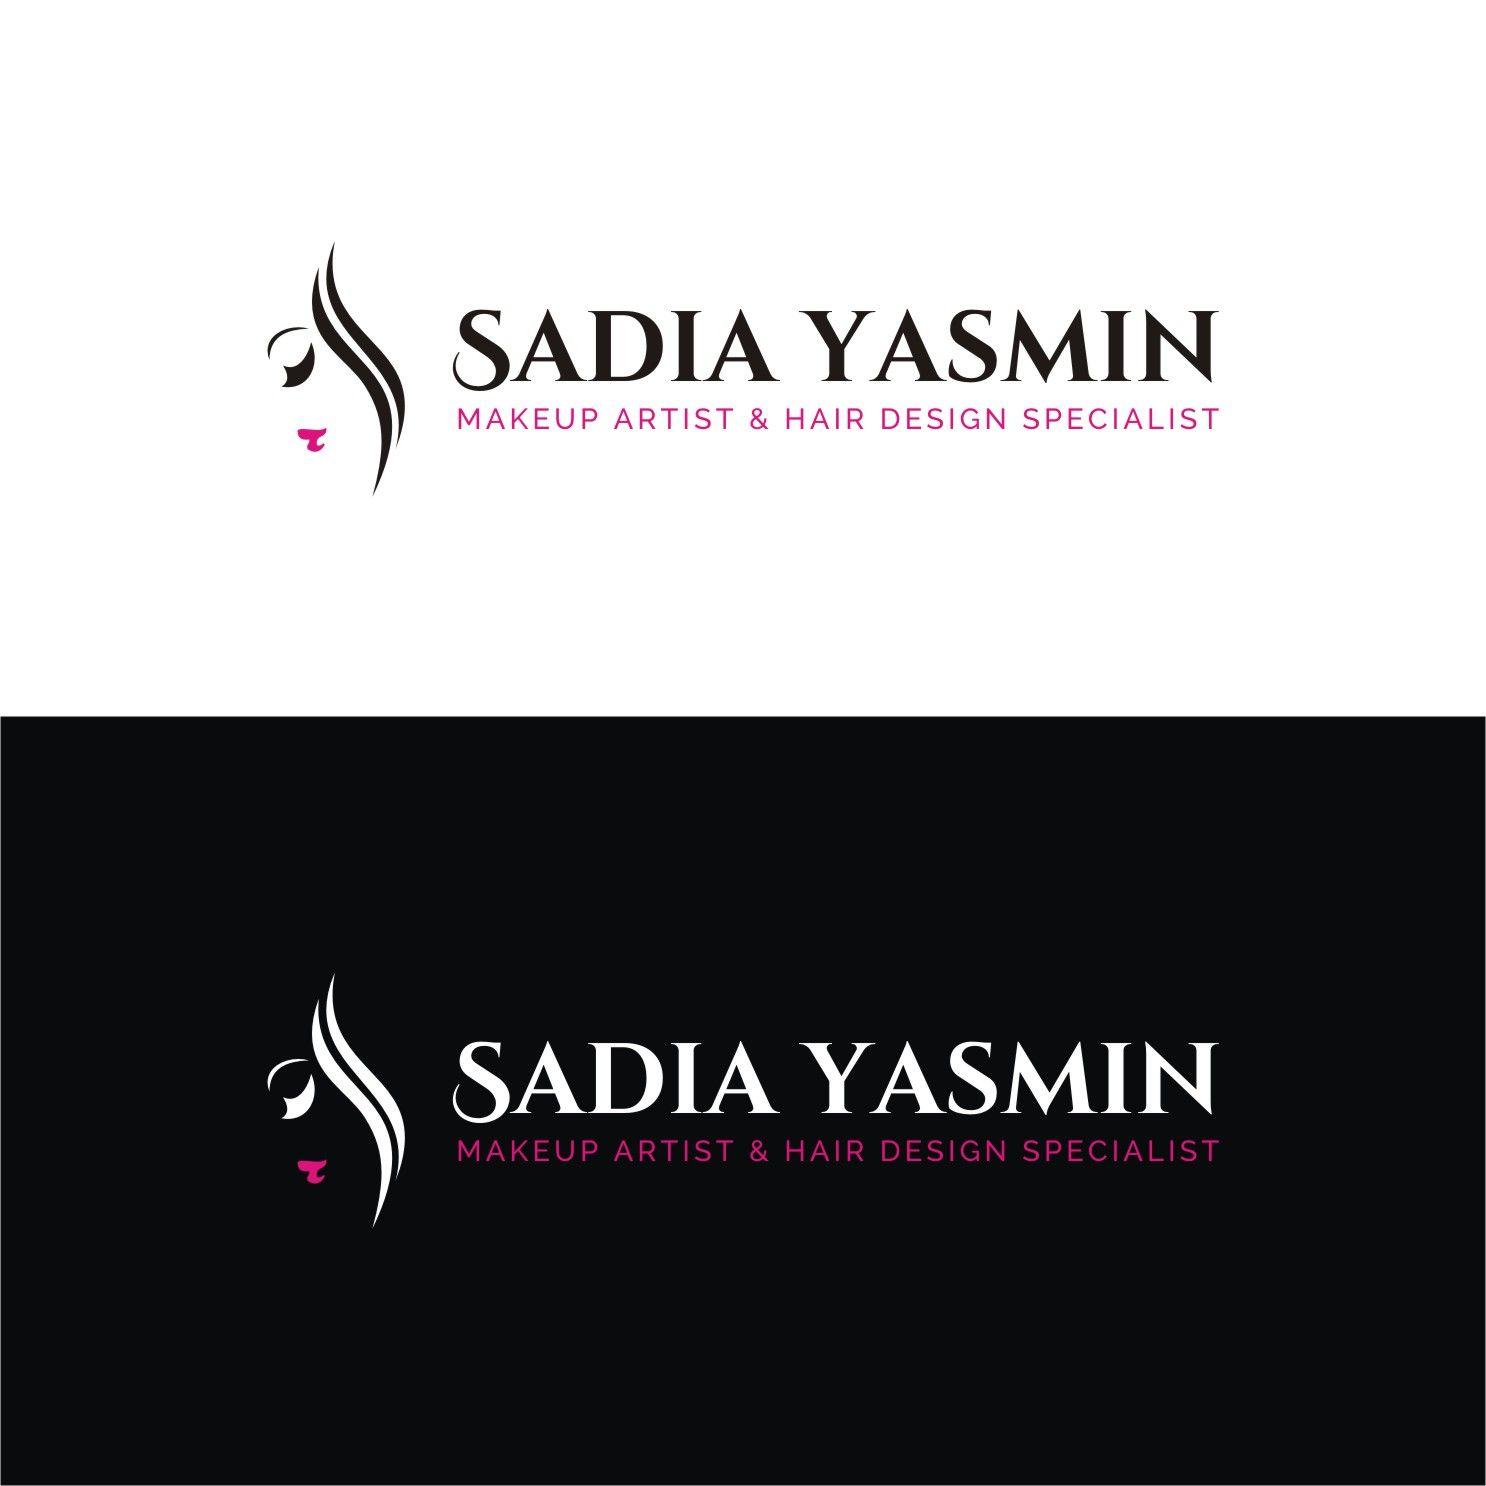 Specialist Makeup Artist Logo - Feminine, Elegant, Makeup Logo Design for Sadia Yasmin